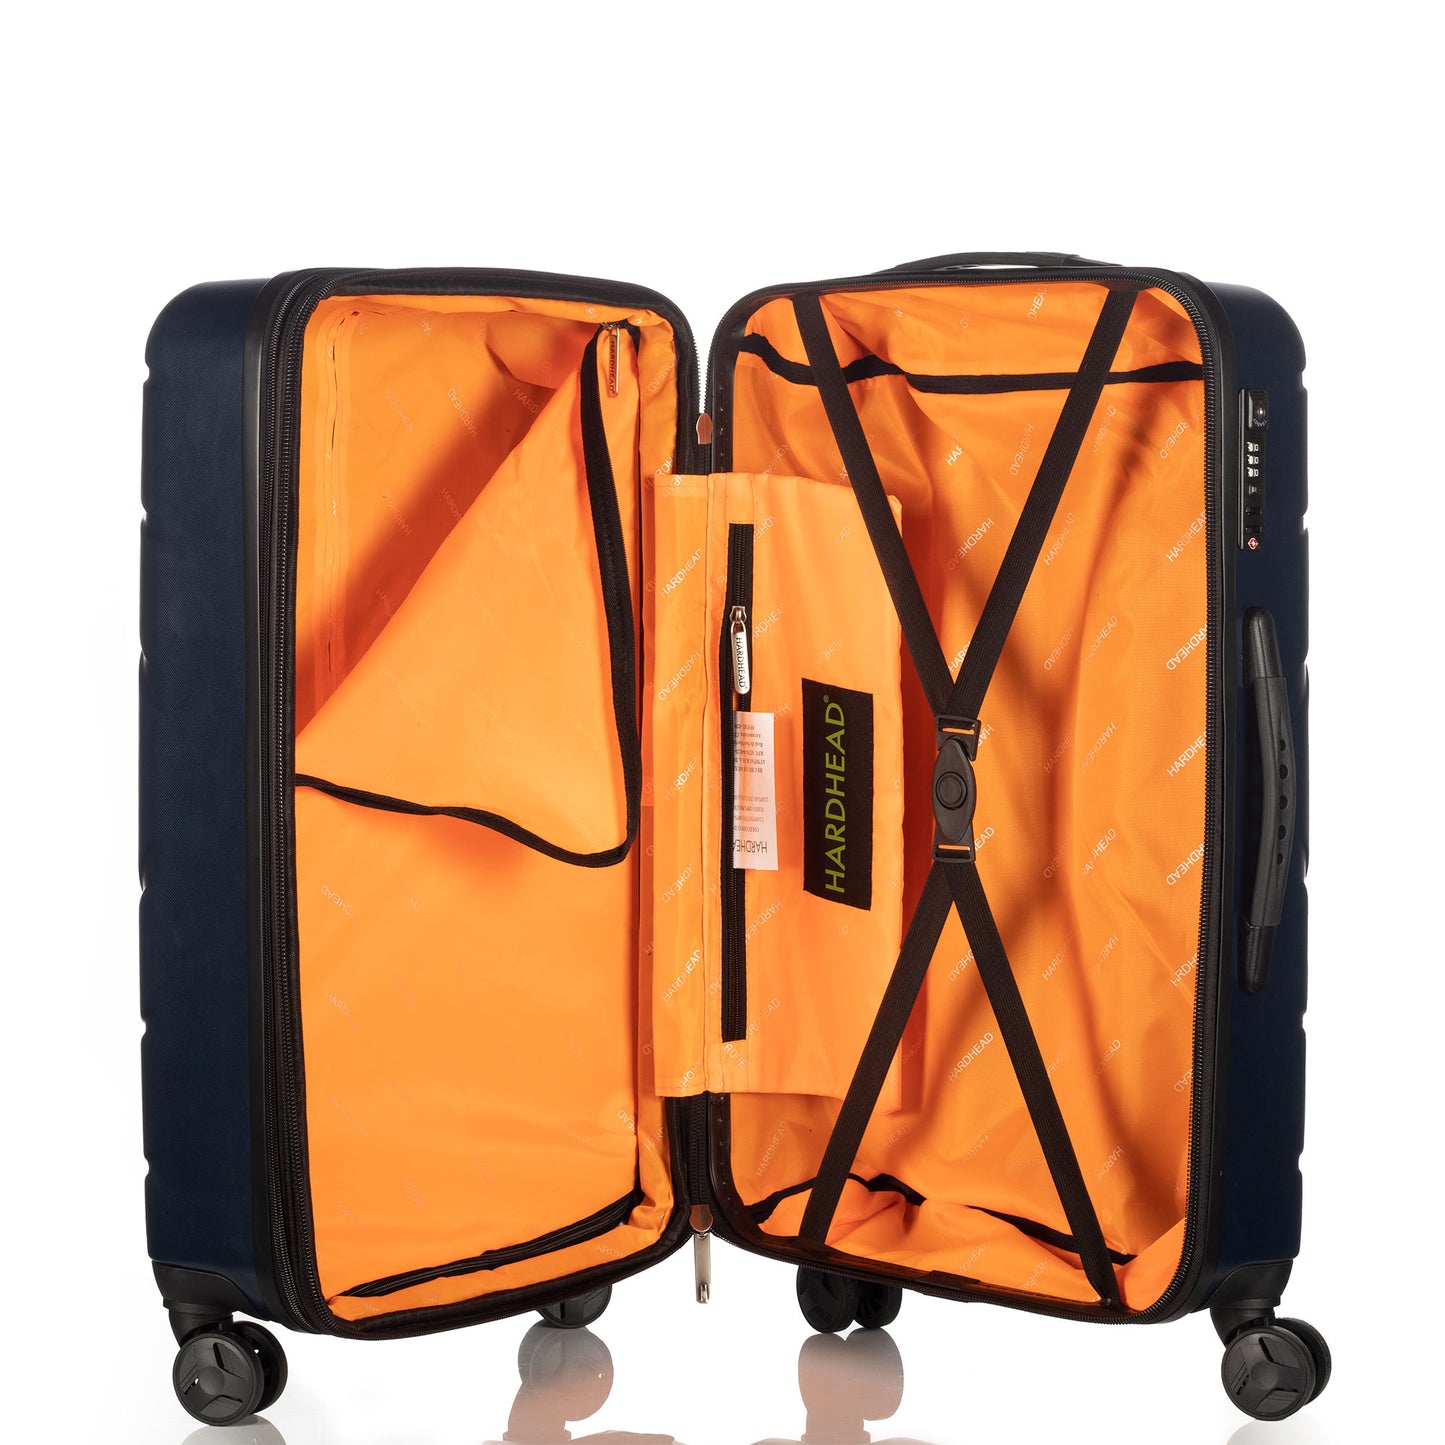 Hardhead Luggage (20/24/28") Eco Hardside Travel Suitcase with 4 360 Wheels Lock Included, Blue